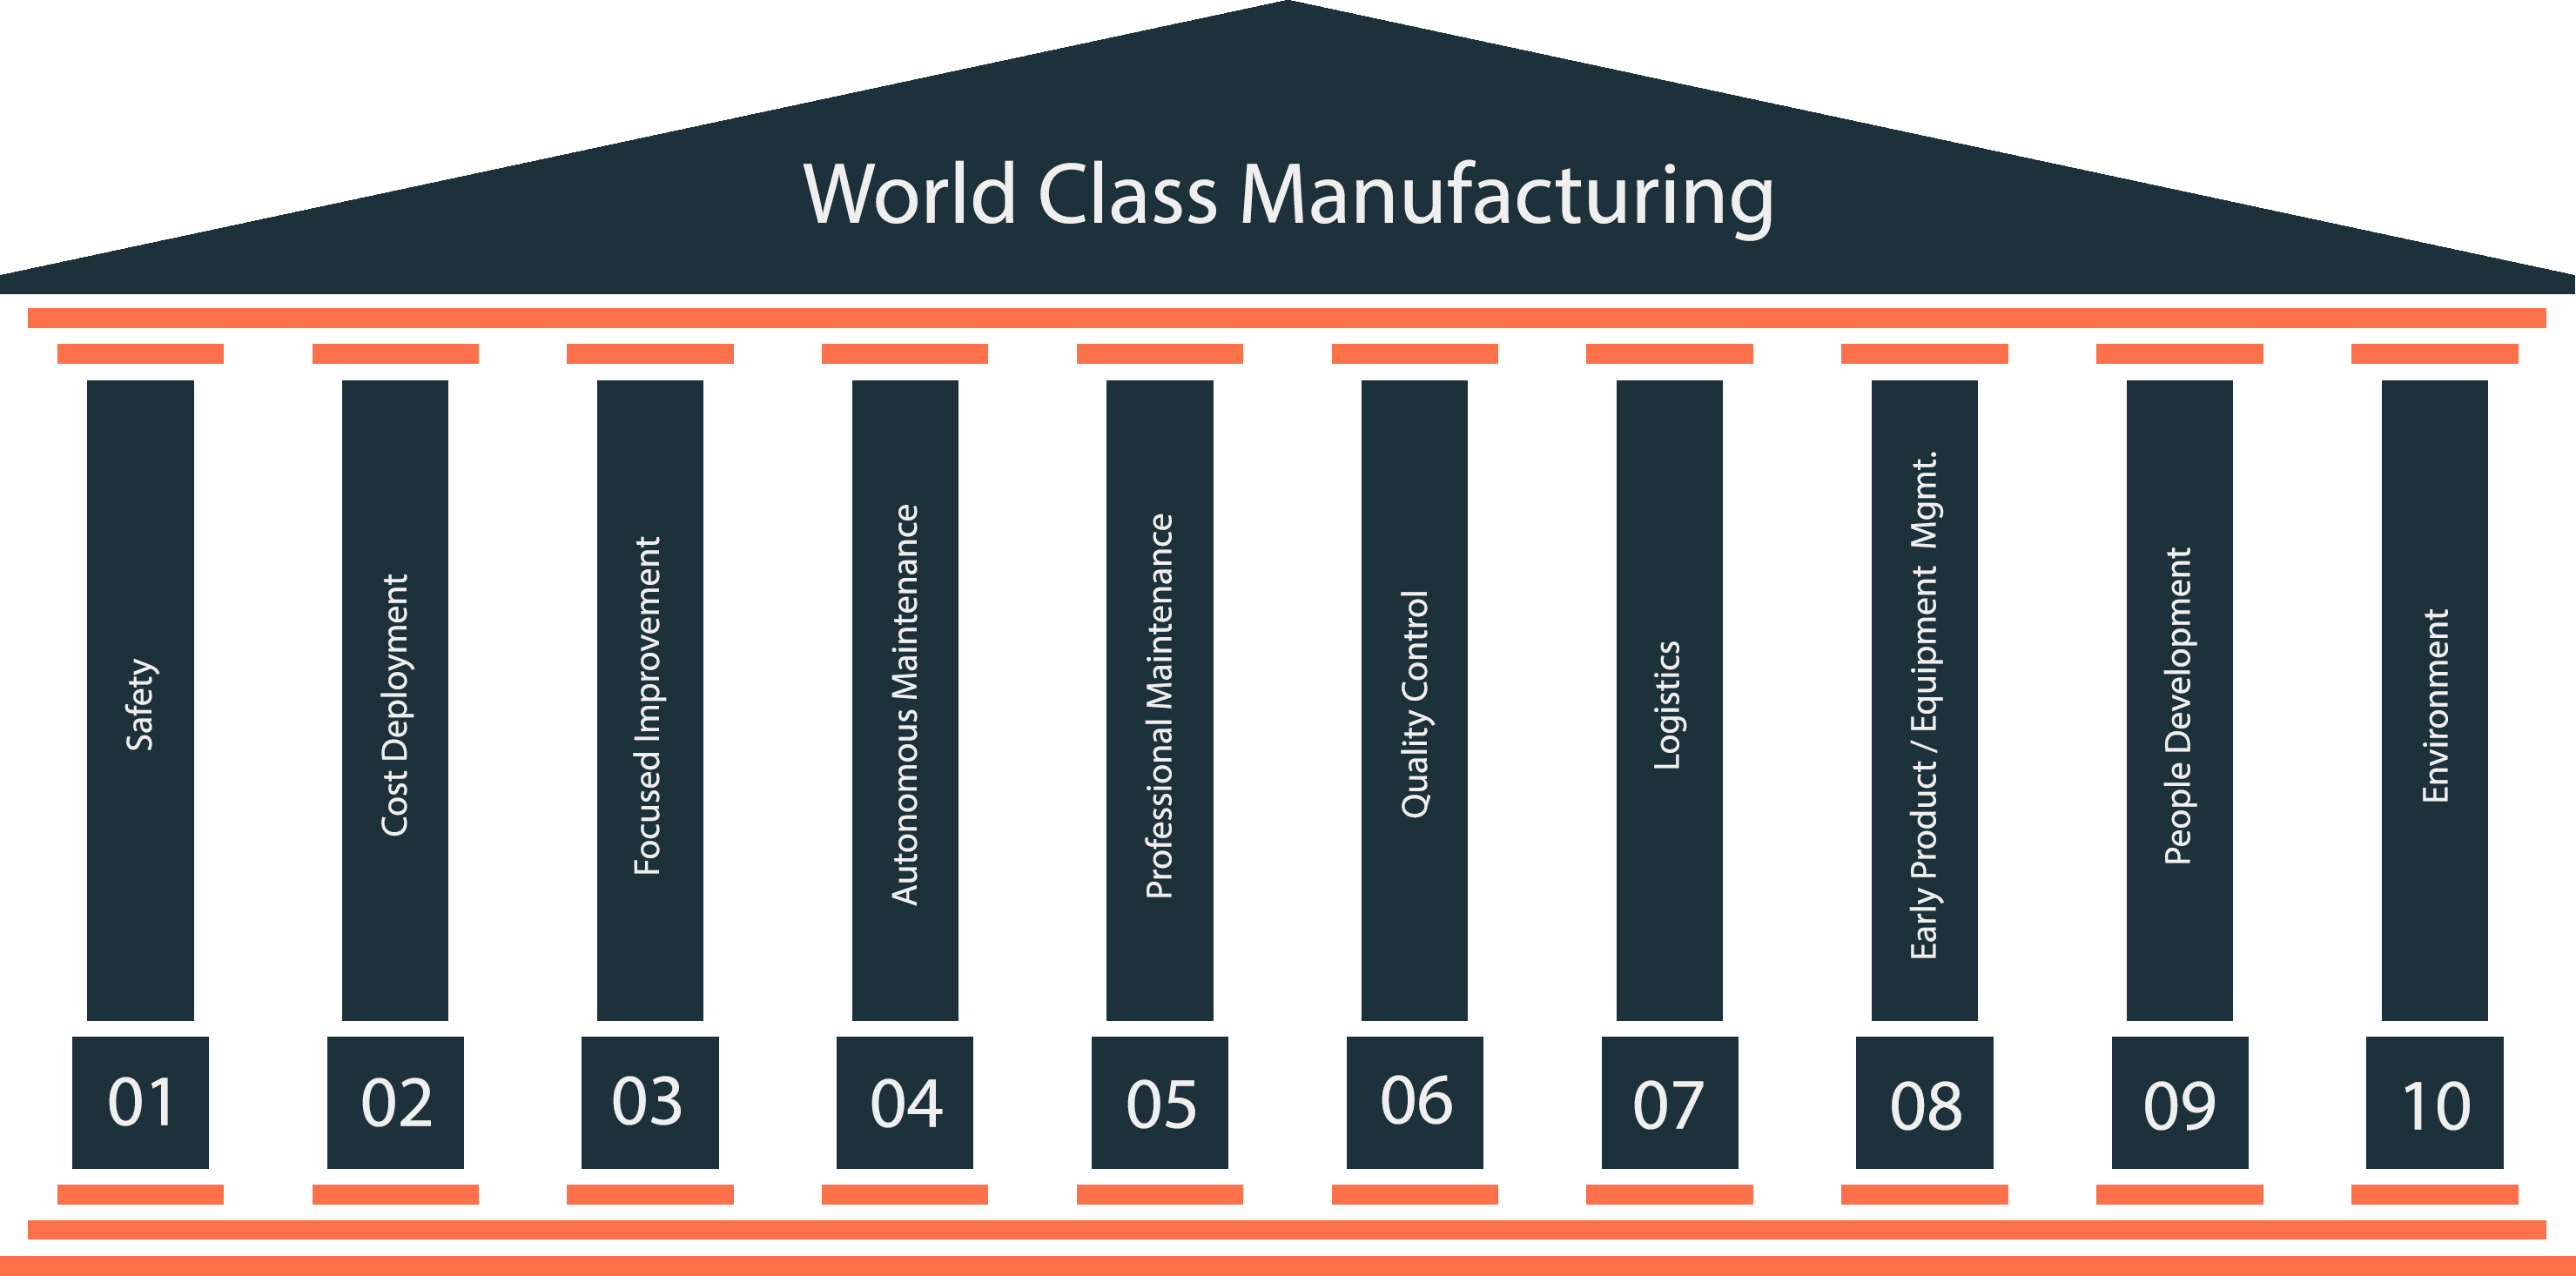 piliers de fabrication de classe mondiale